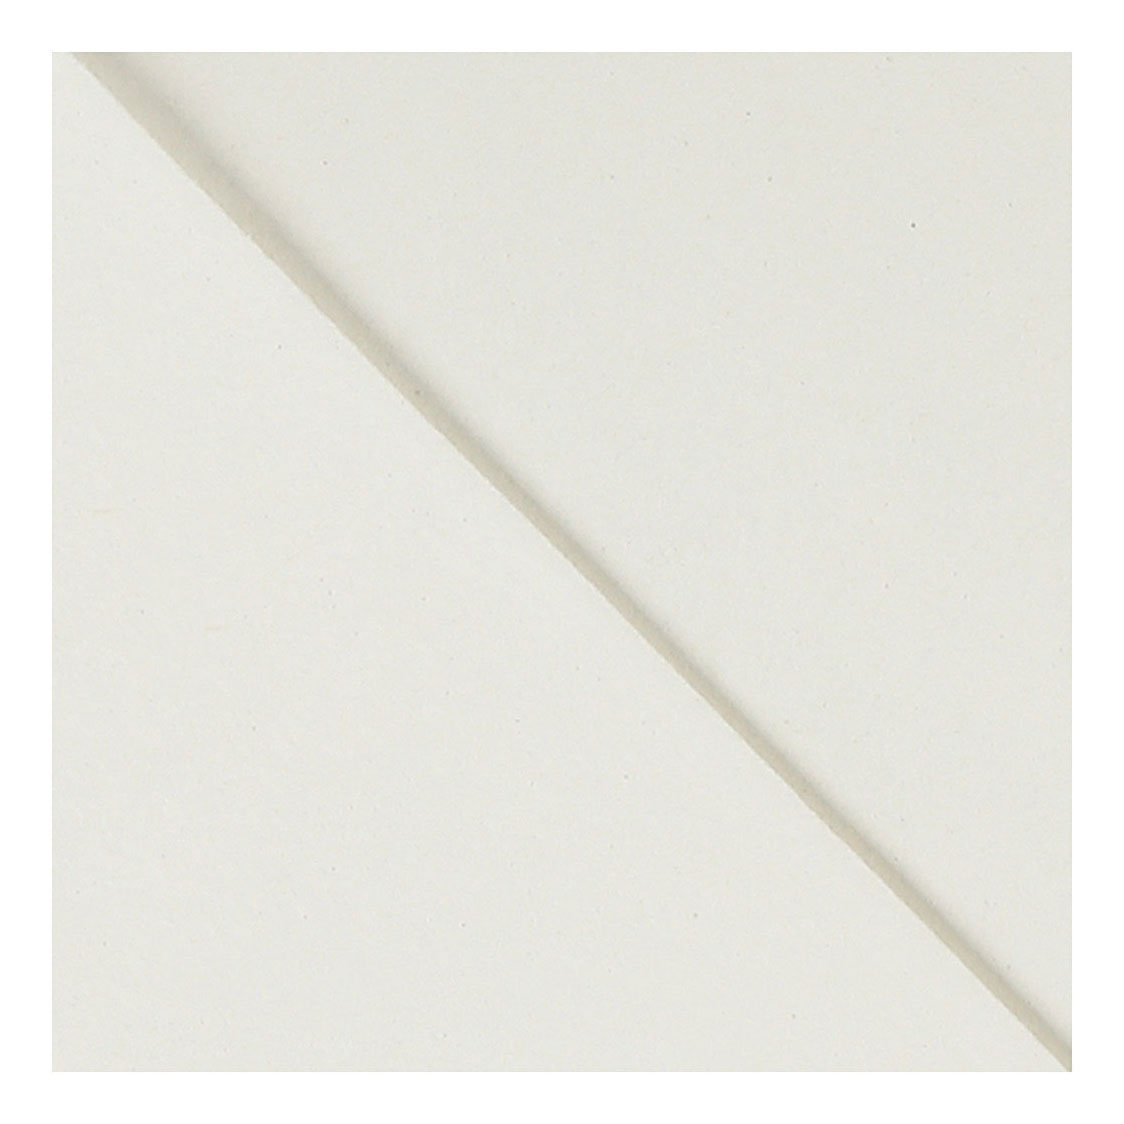 Busta Creativ Company bianco sporco, 11,5x15 cm, 10 pezzi.